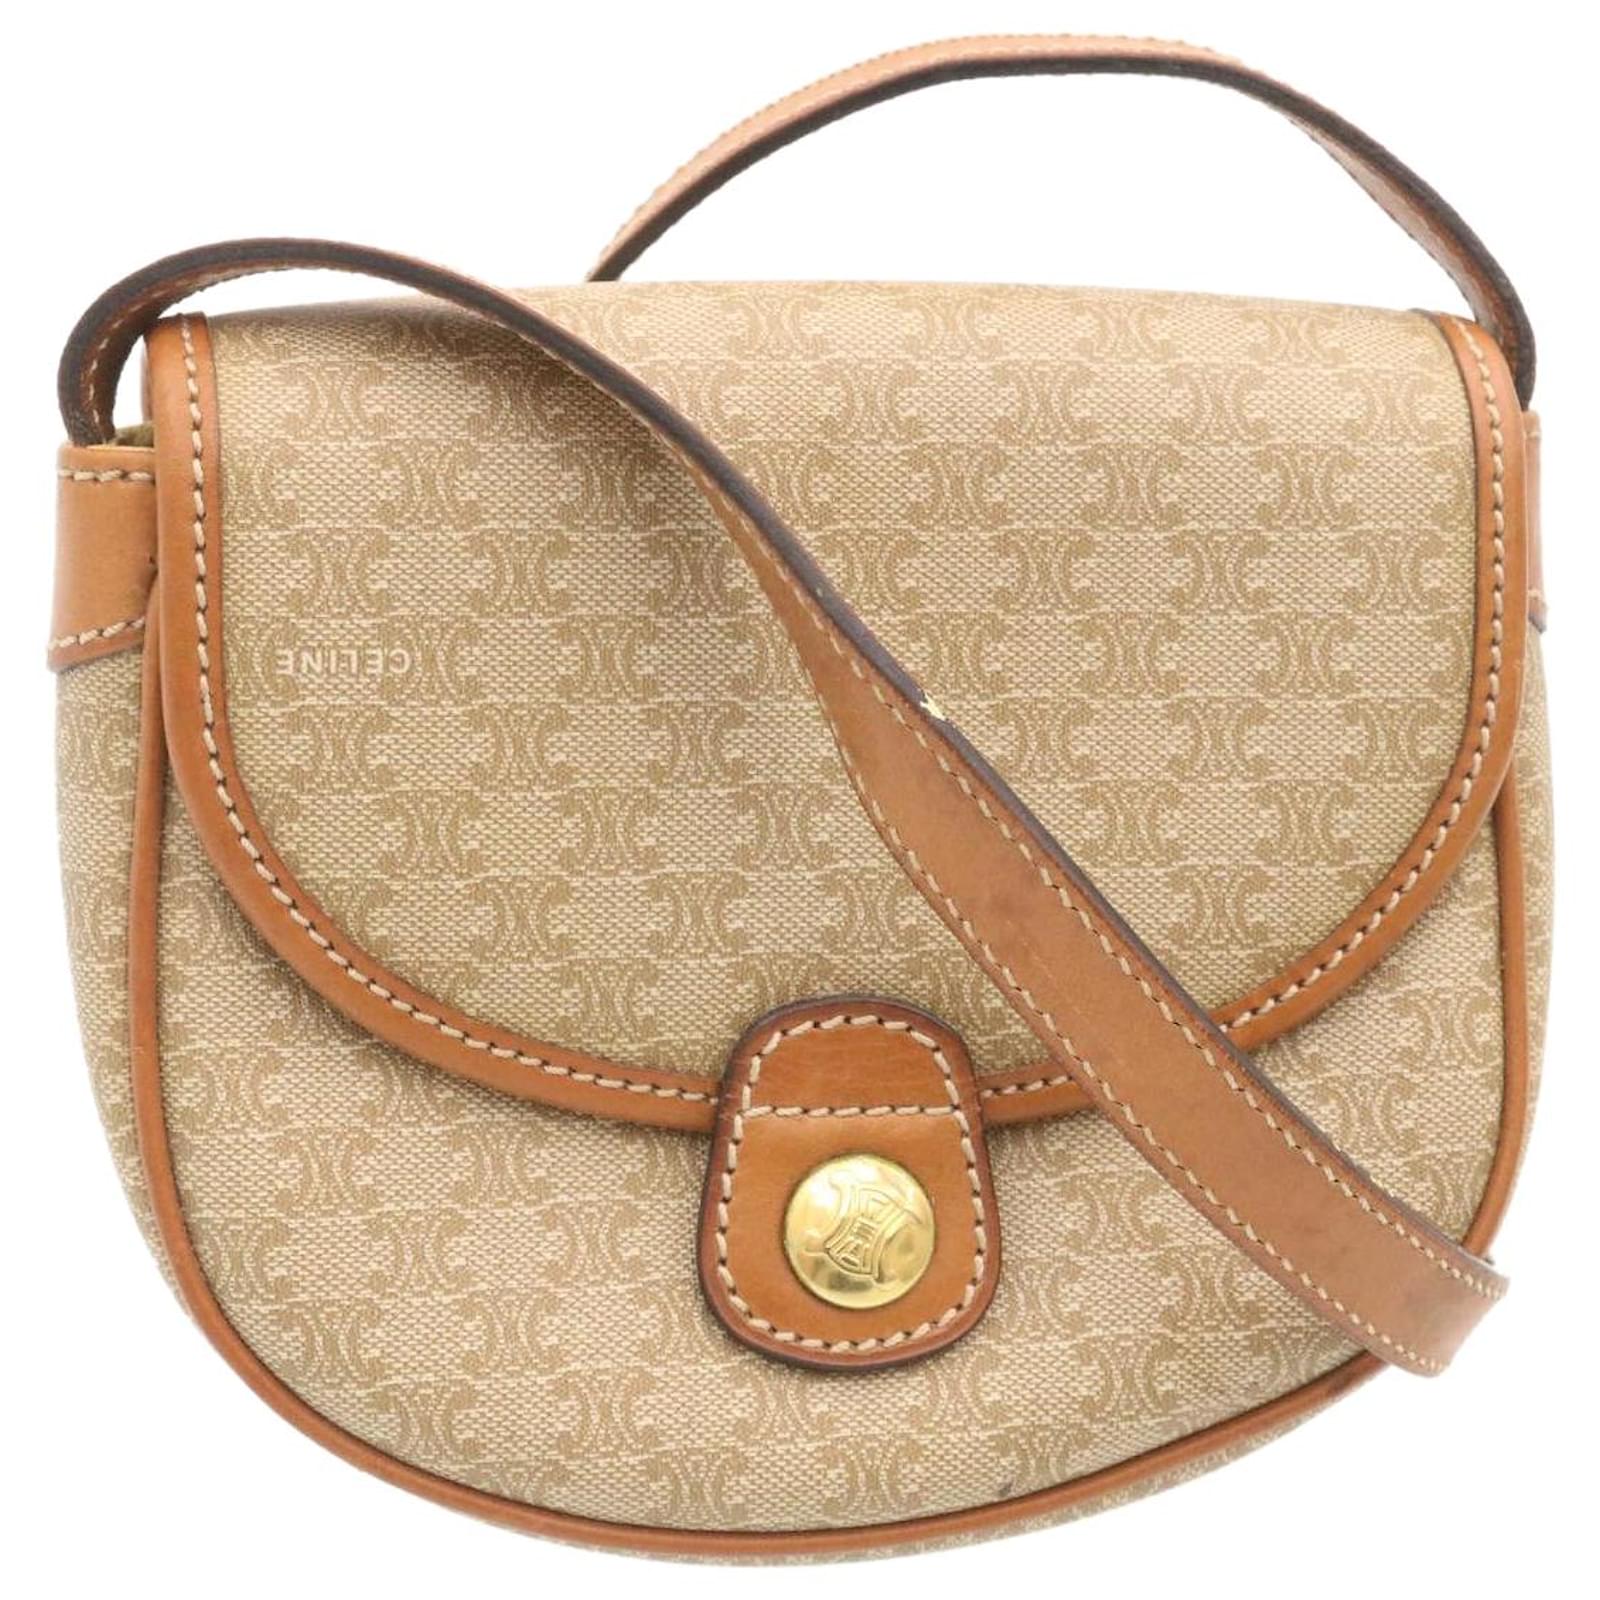 Celine - Authenticated Handbag - Cotton Brown for Women, Good Condition